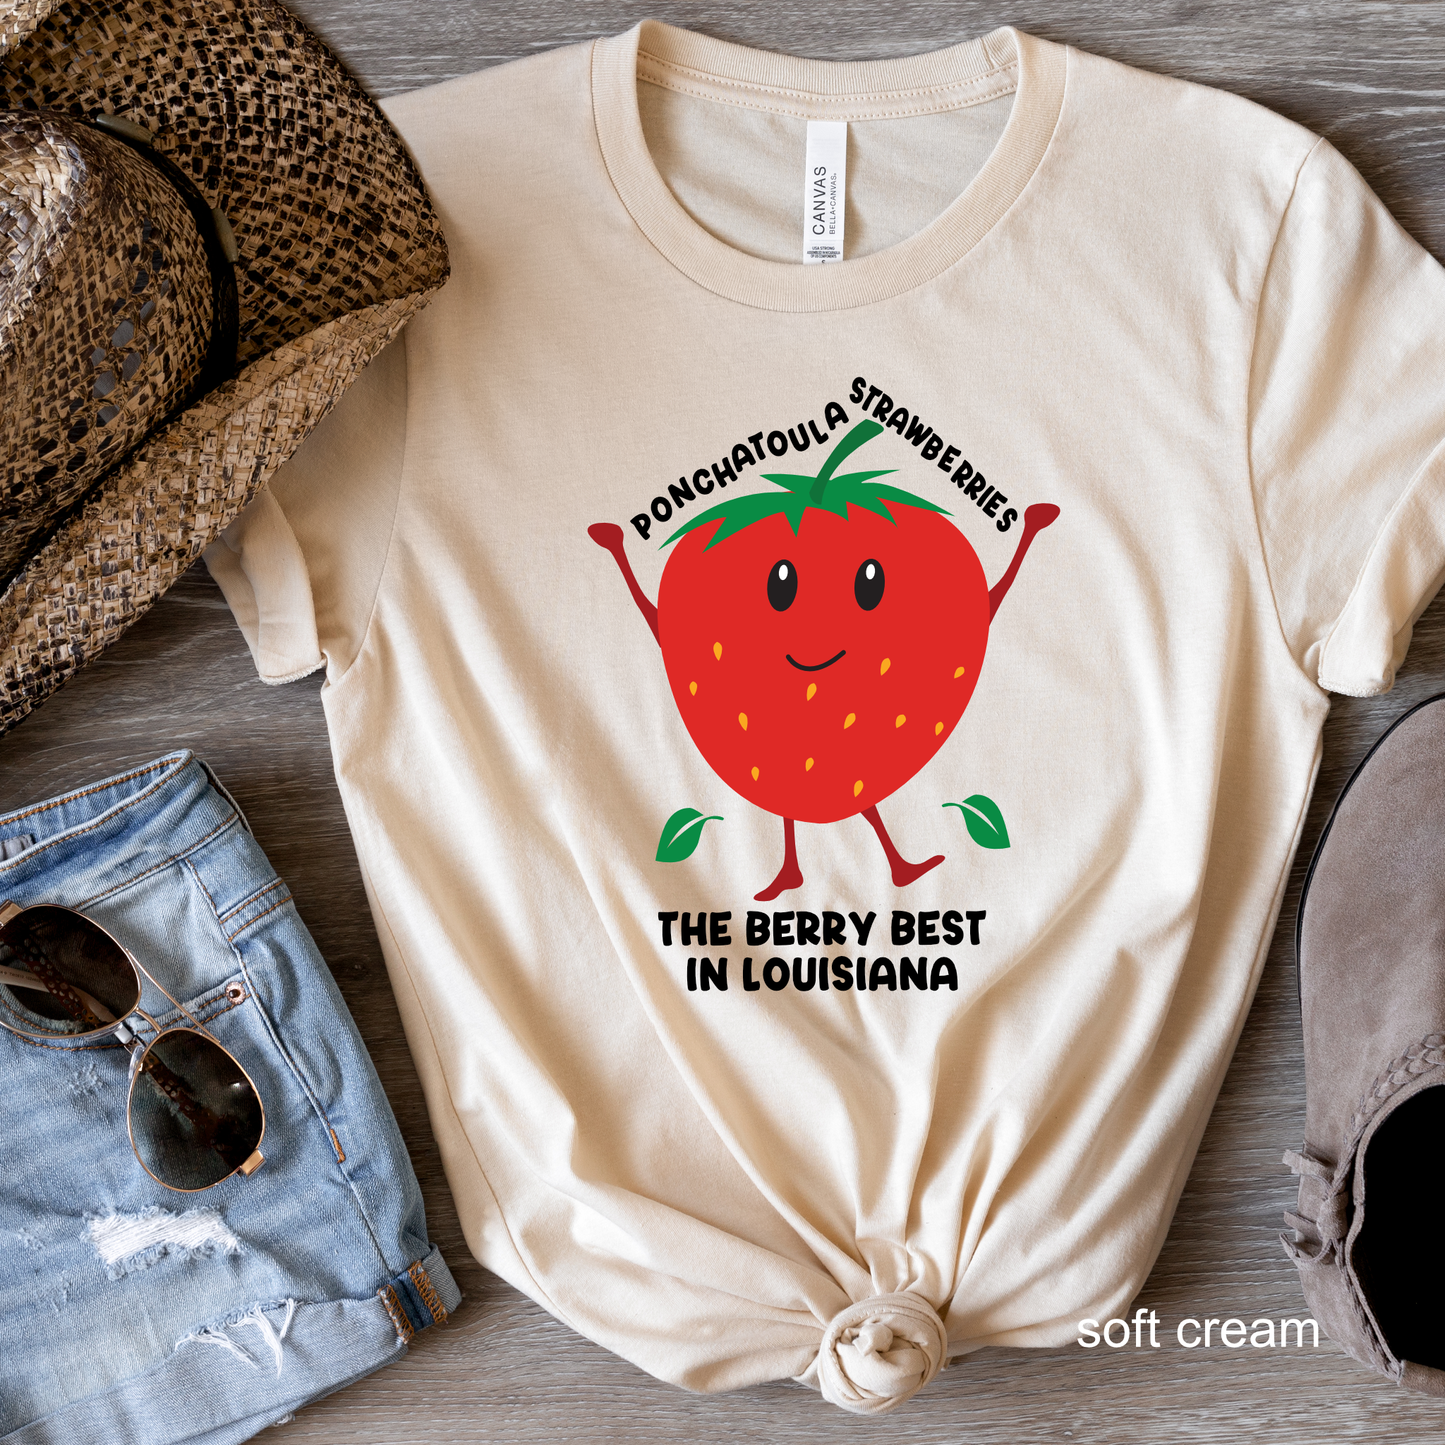 Berry Best Strawberries - Ponchatoula - Strawberry Festival T-shirt